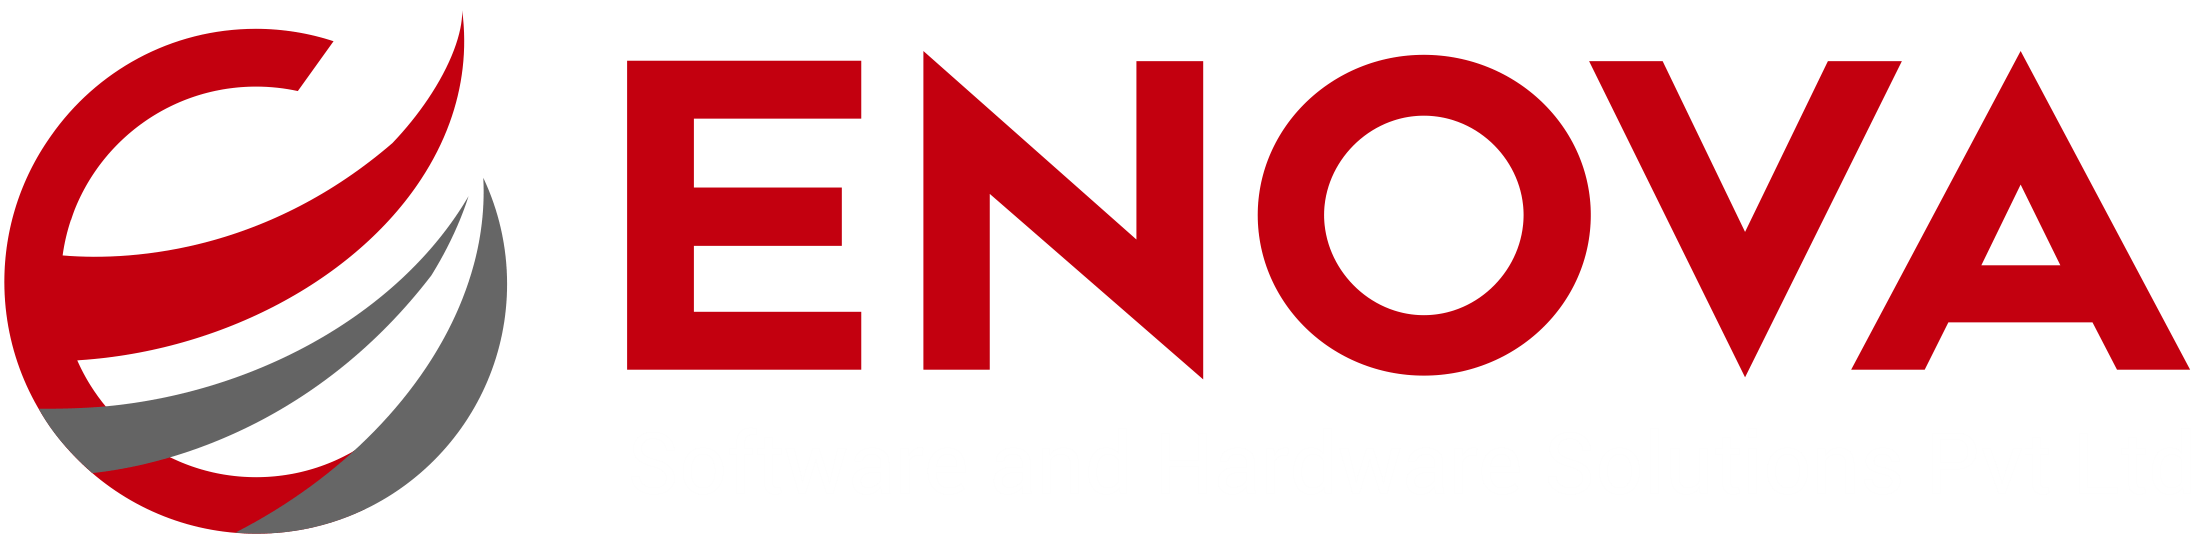 enova logo